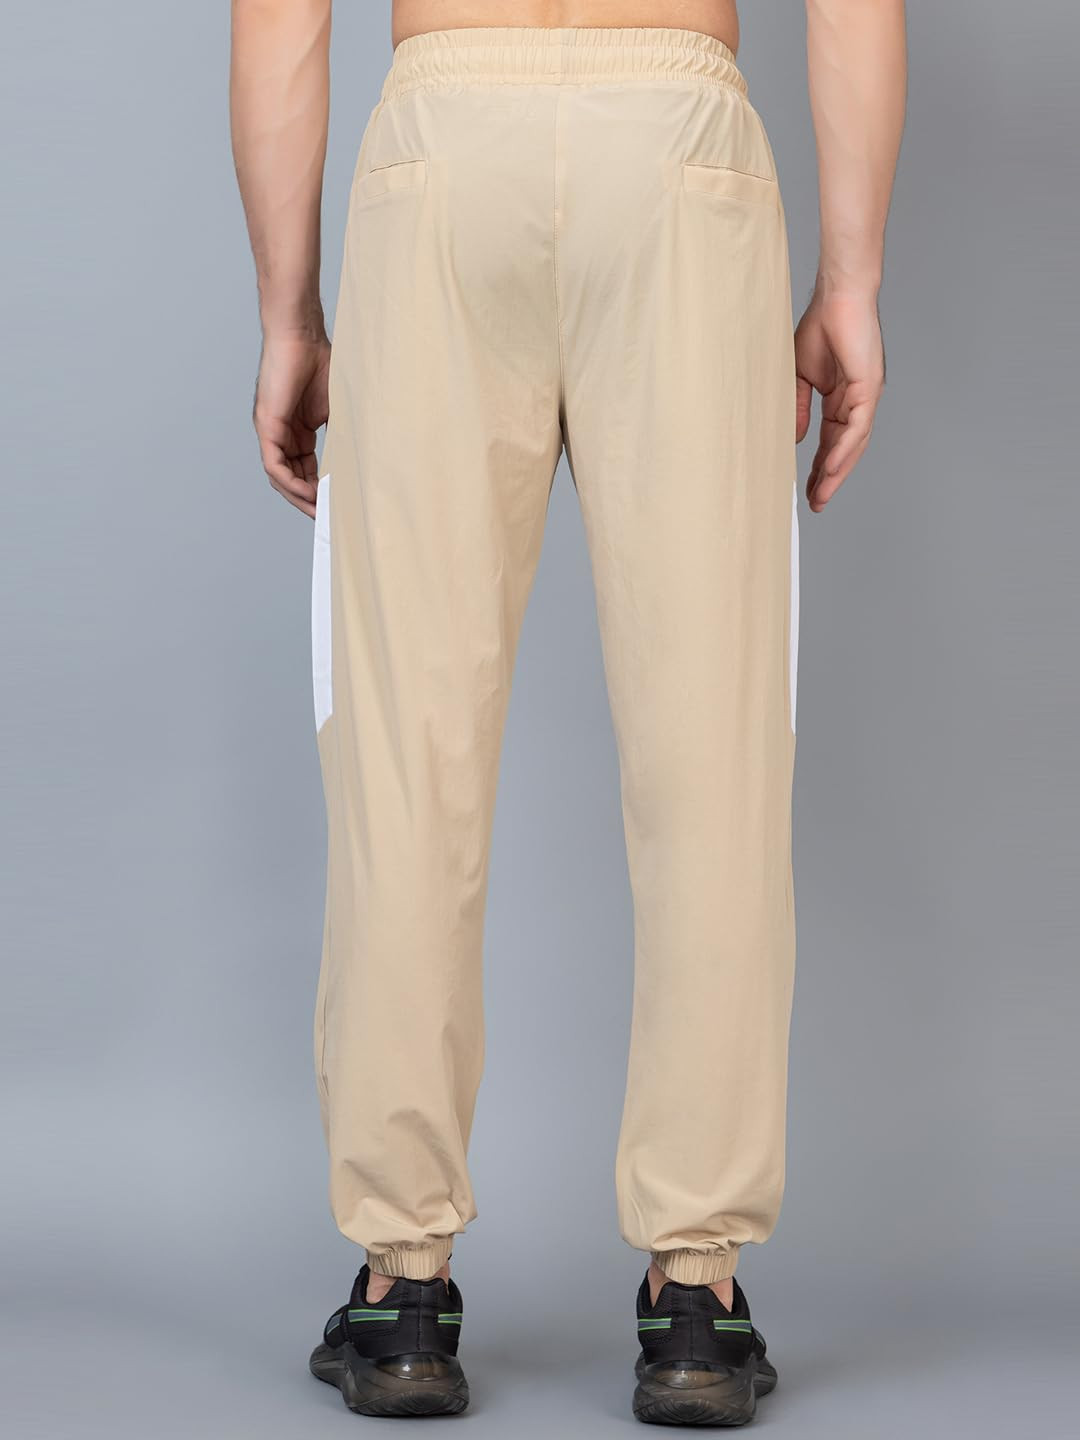 Amazon.com: BUAKOYP Girls Sweatpants Pink Cargo Pants for Women Navy Blue  Pants Pink Pants for Women Navy Blue Sweatpants : Clothing, Shoes & Jewelry